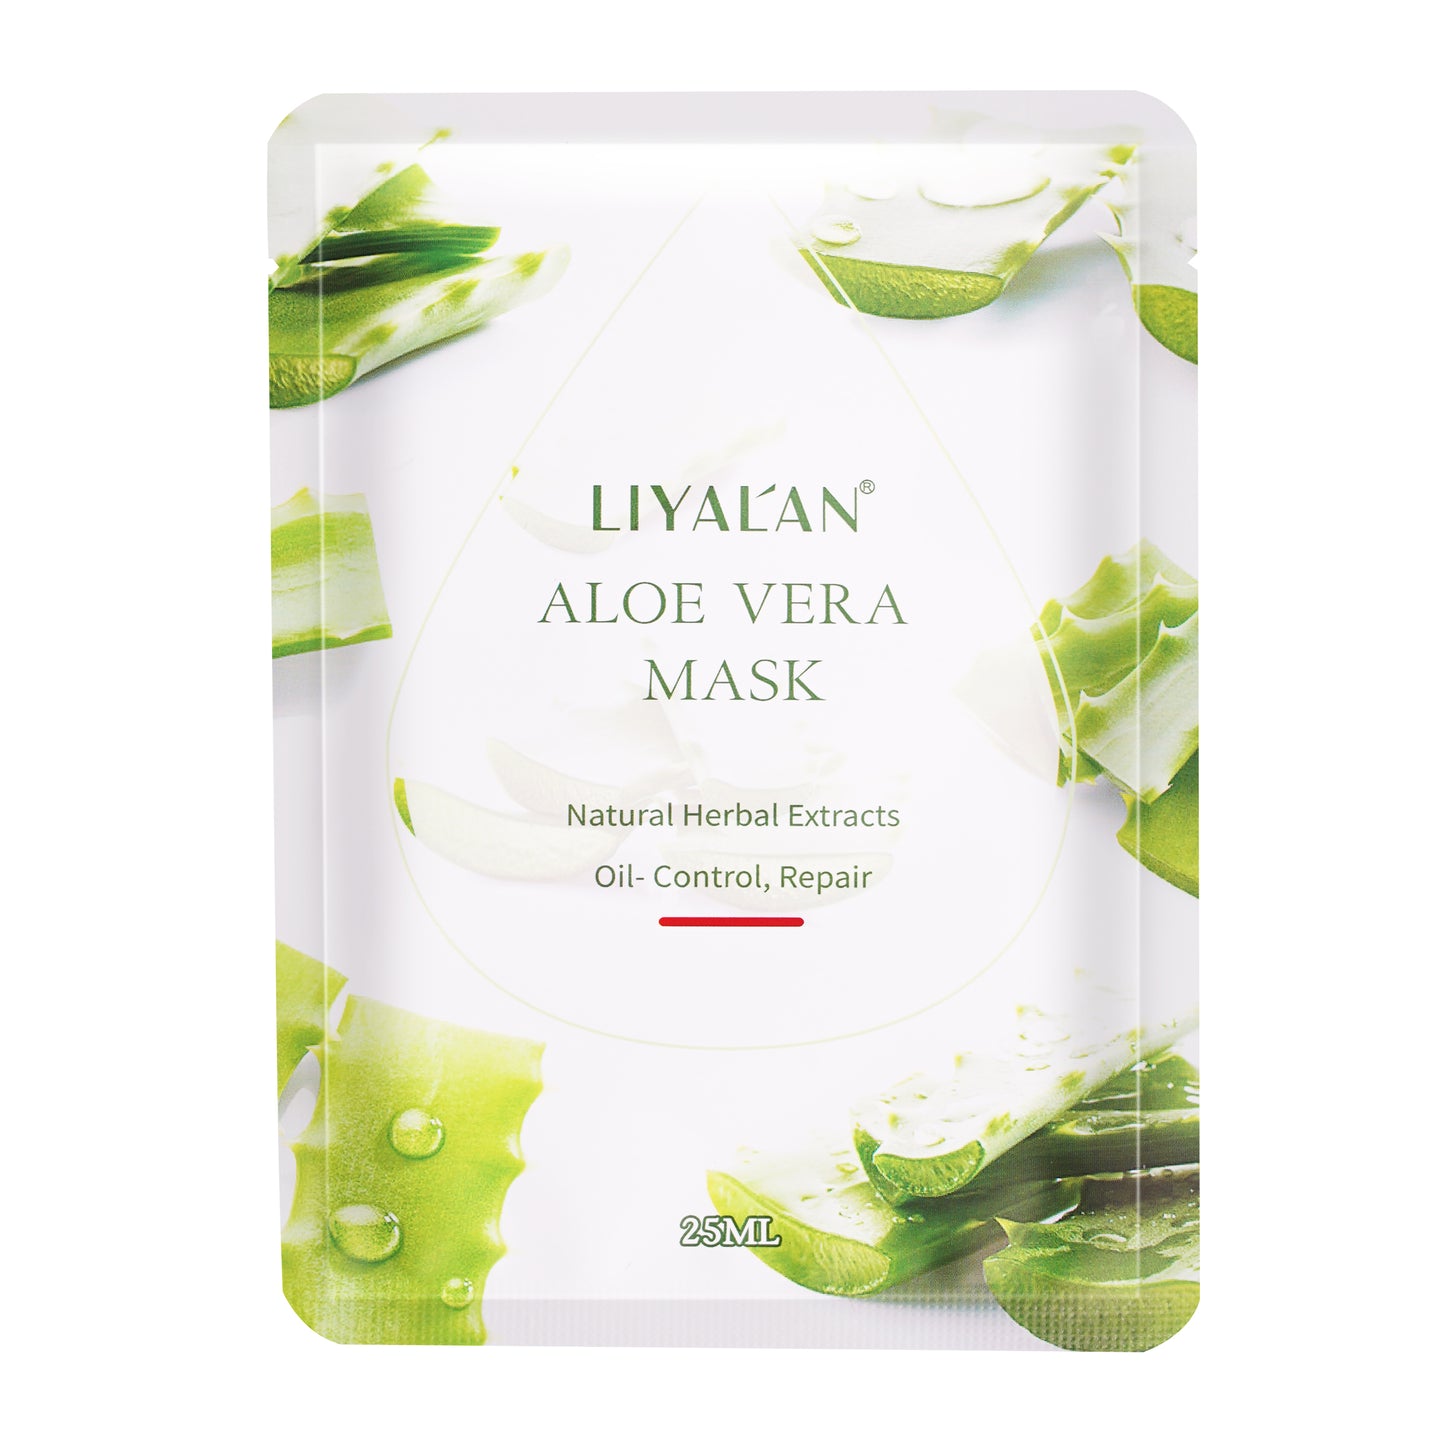 Whitening Hydrating Sheet Mask With Natural Organic Fruit Vitamin